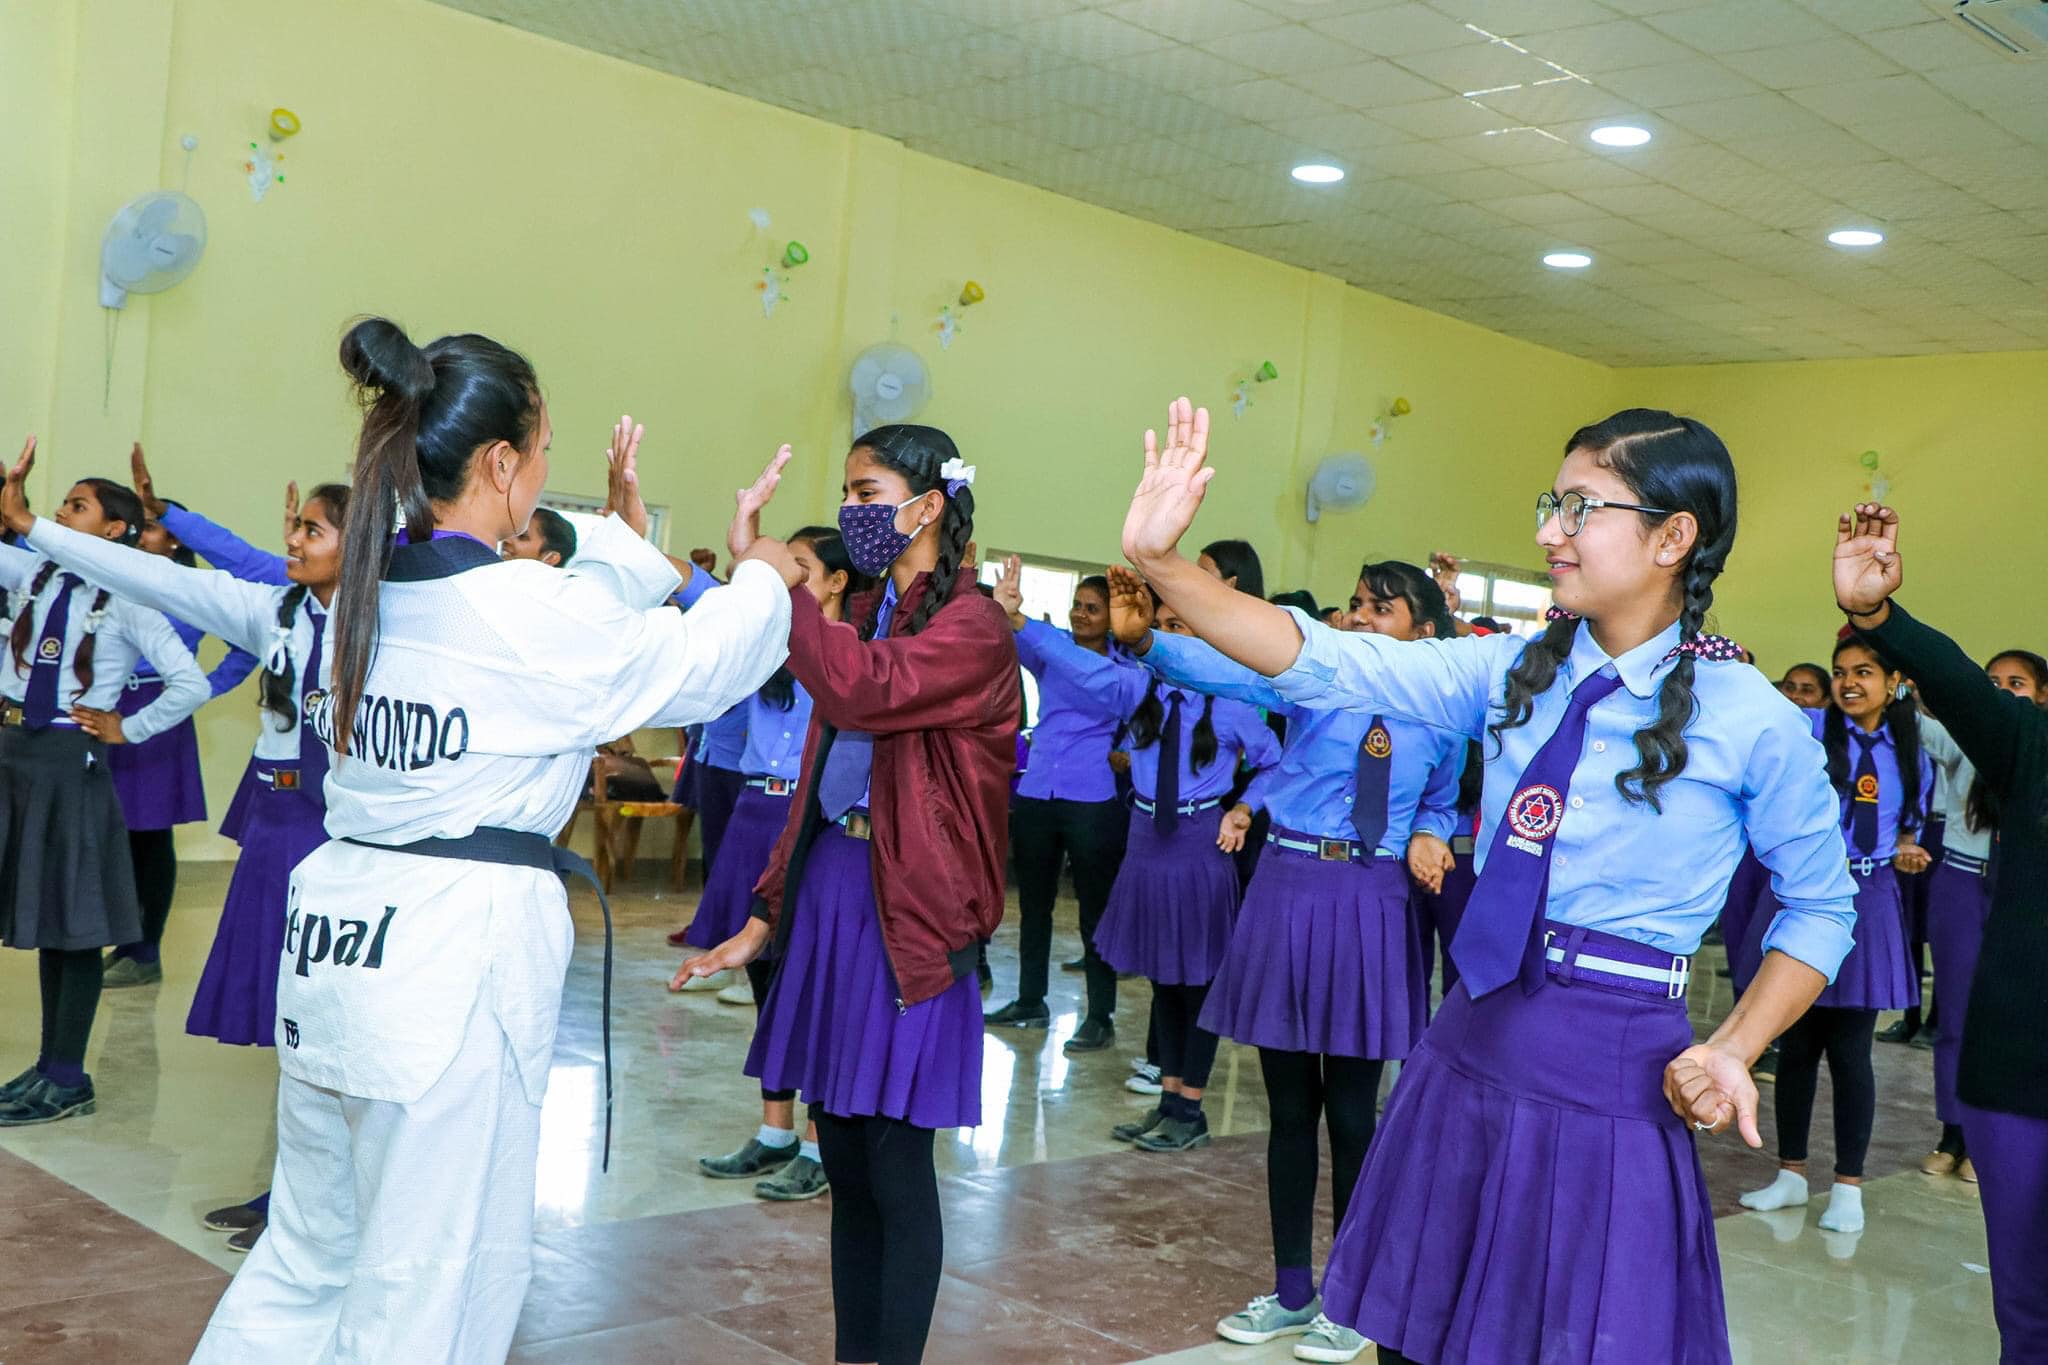 Self-defense training organized for women, girls